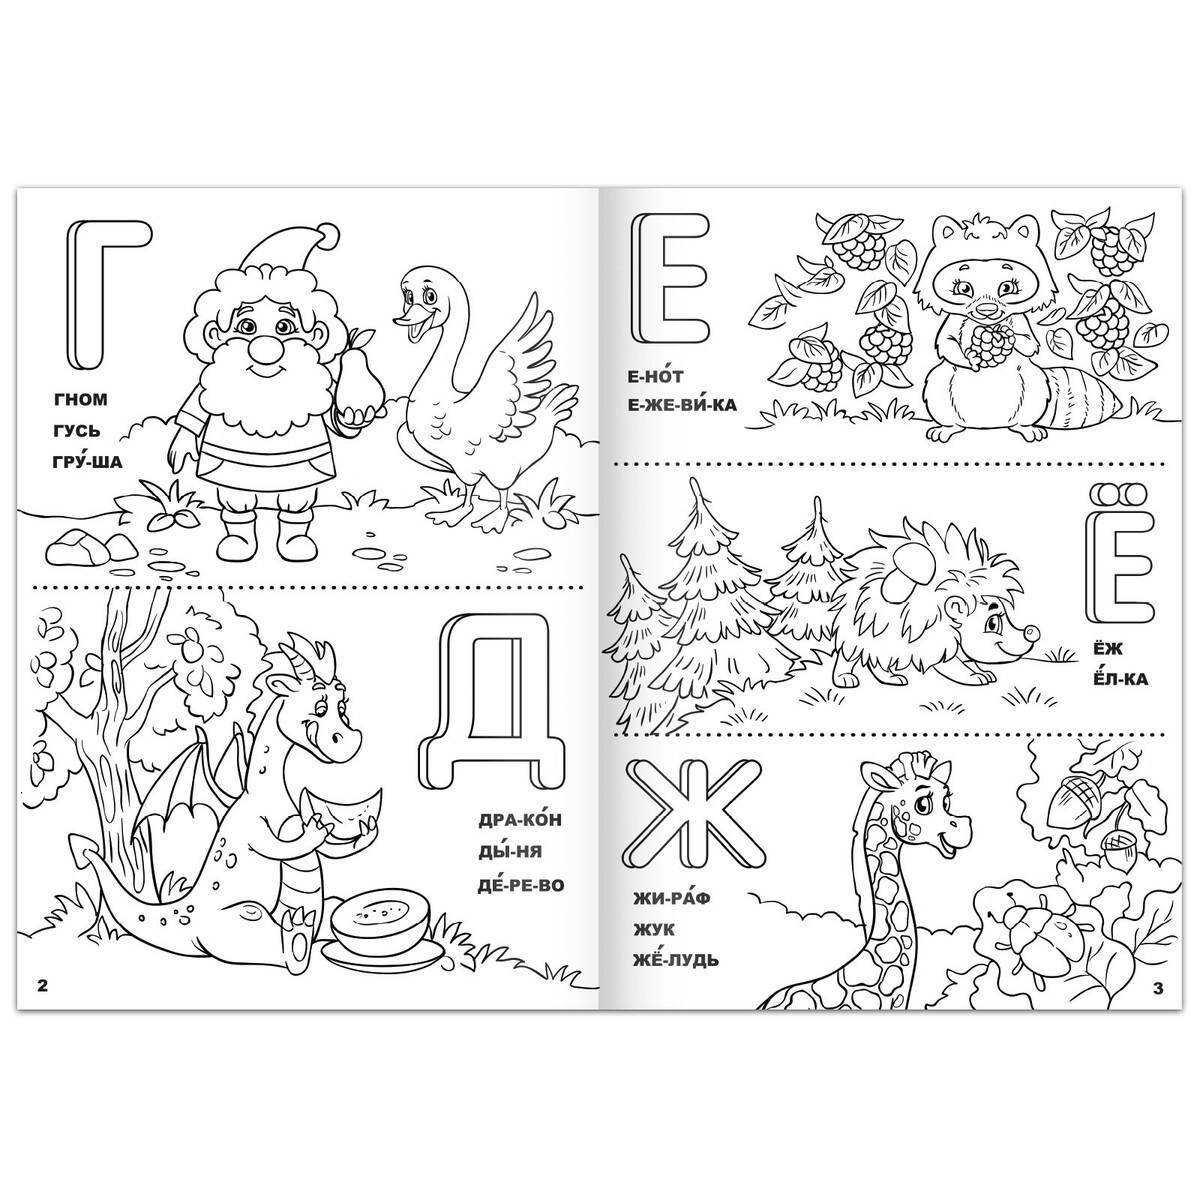 Creative alphabet loris coloring book